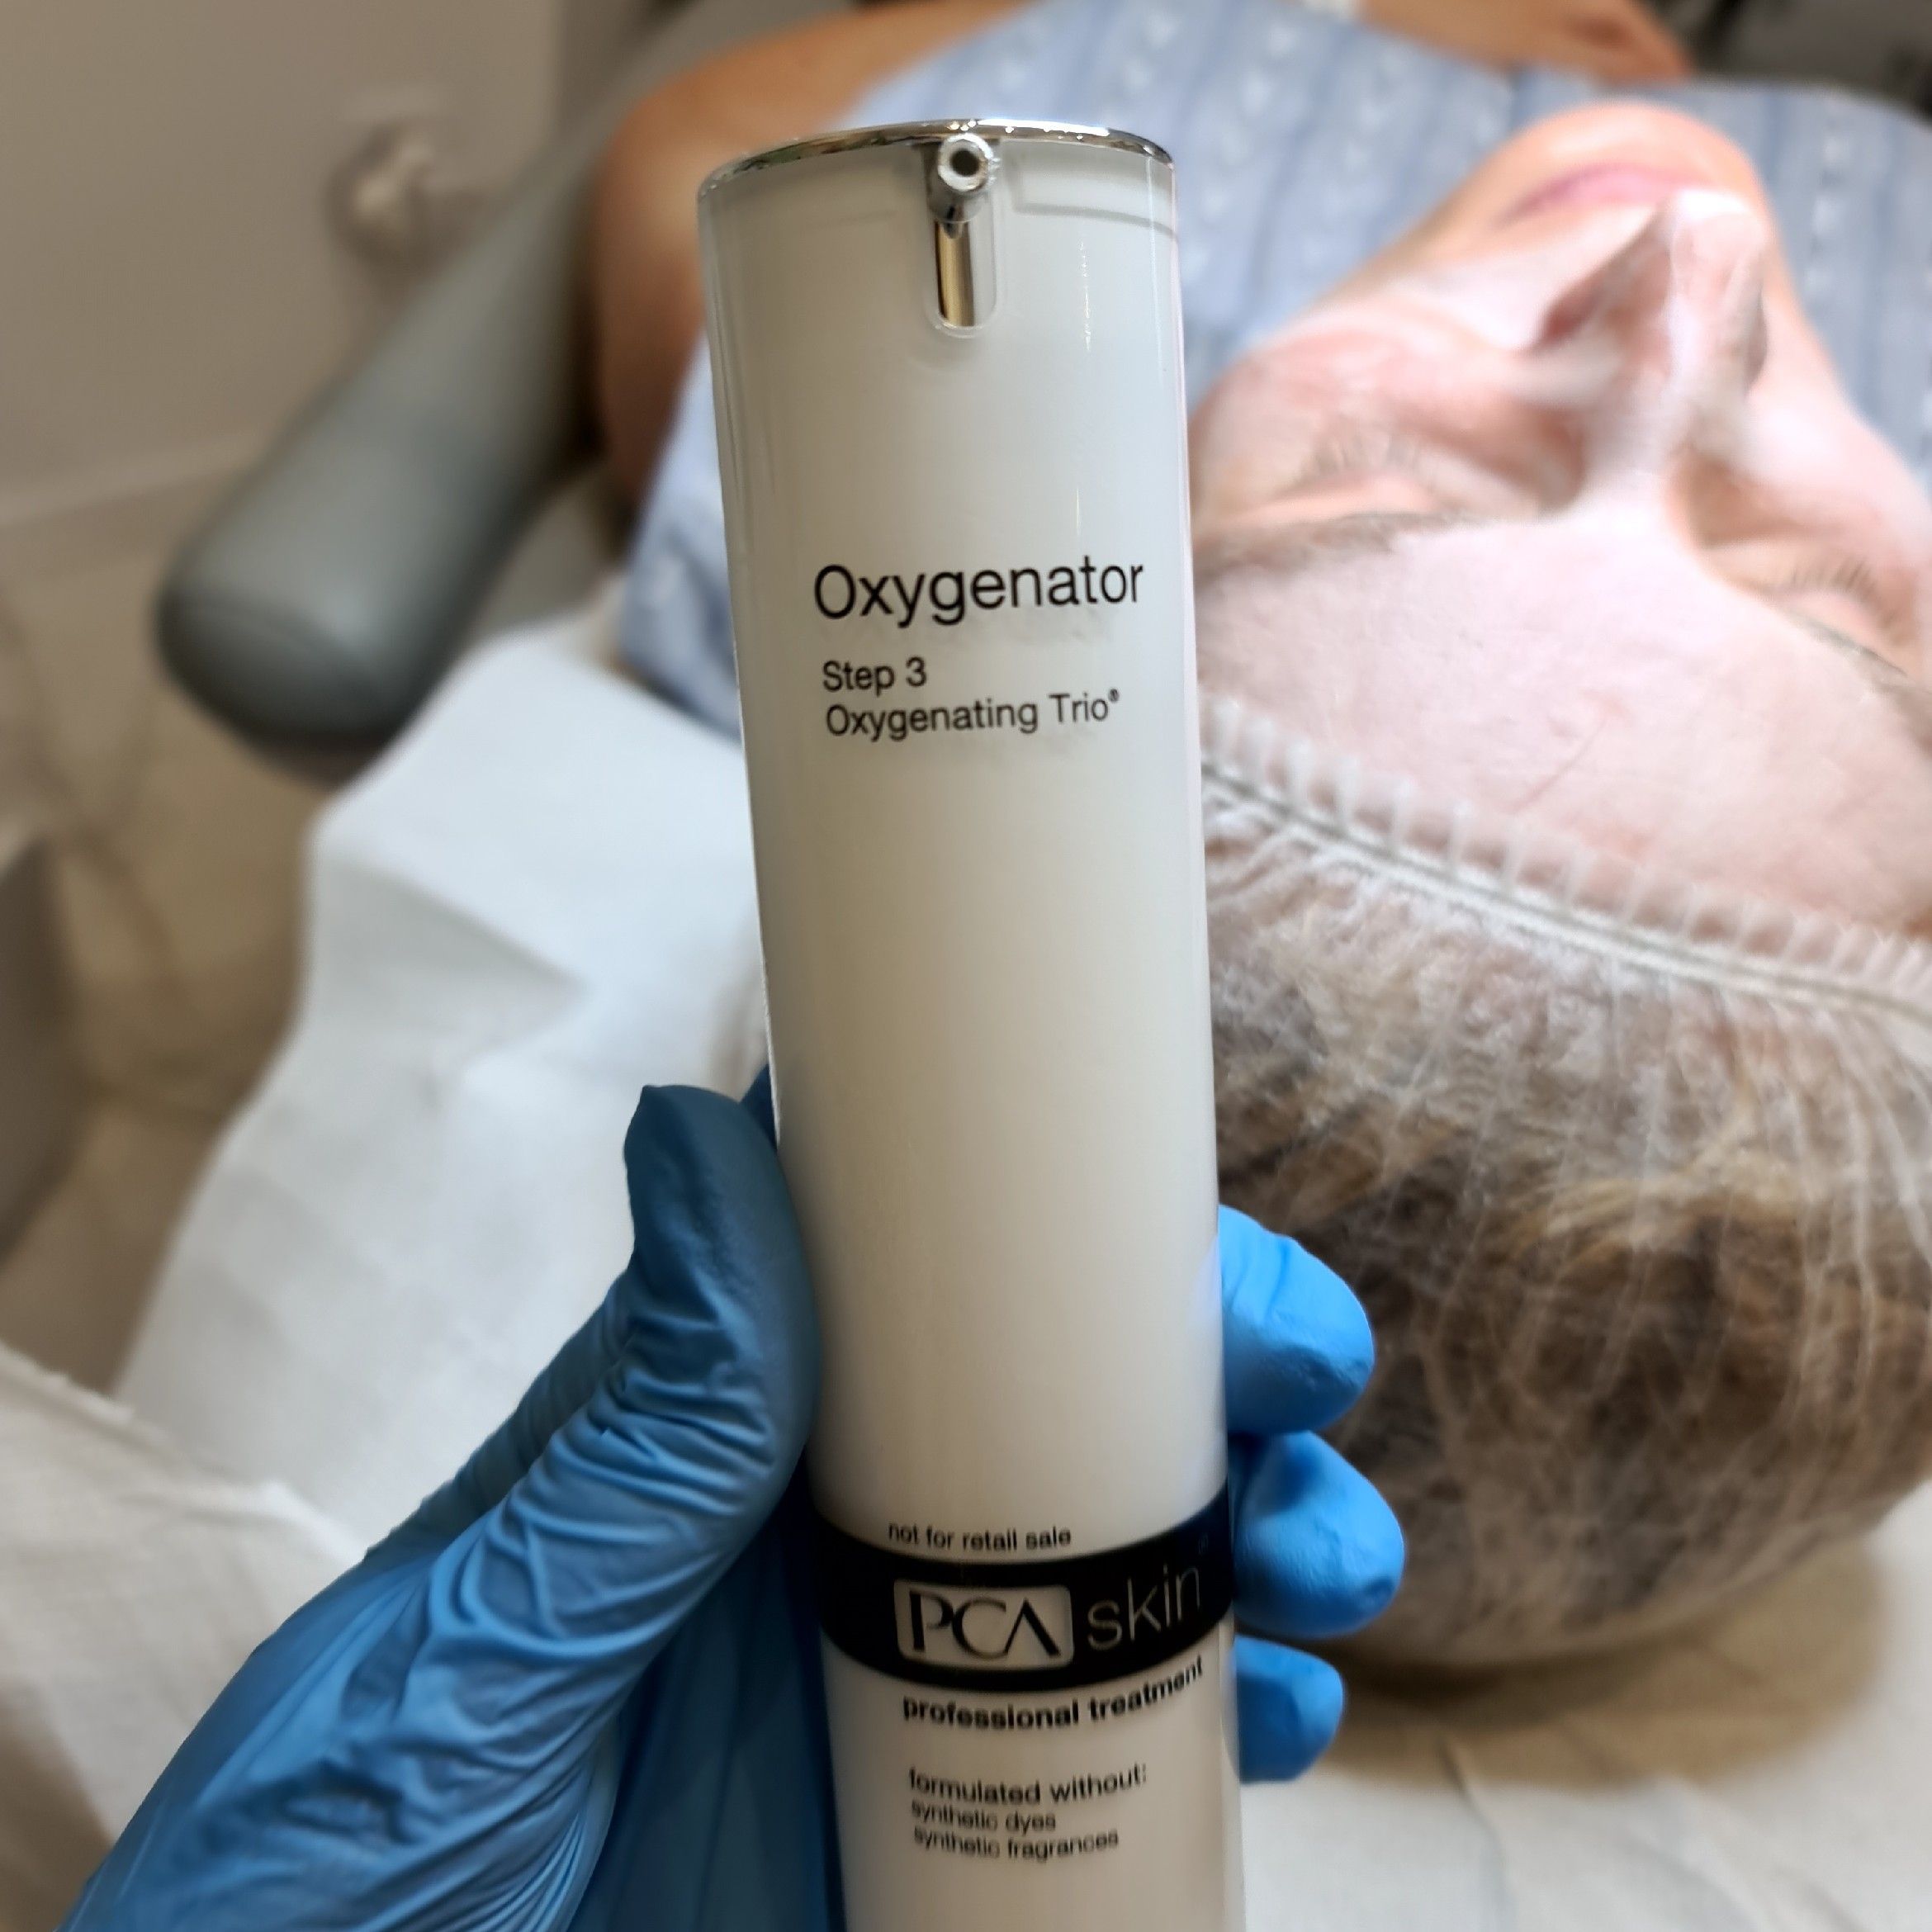 Portfolio usługi Oxygenating Trio - laboratorium Pca Skin